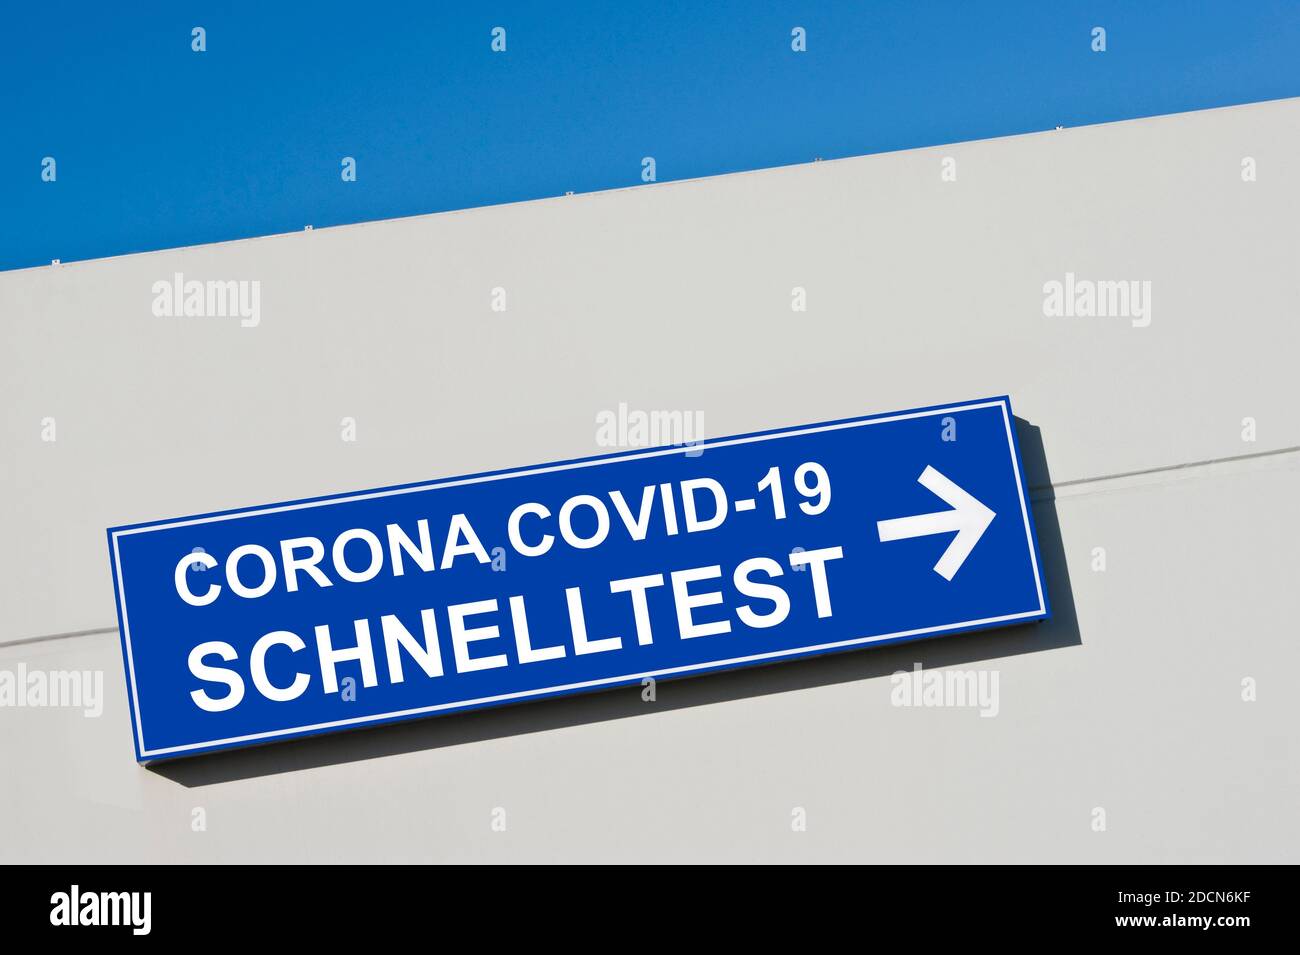 Corona Covid-19 Schnelltest enfant Banque D'Images